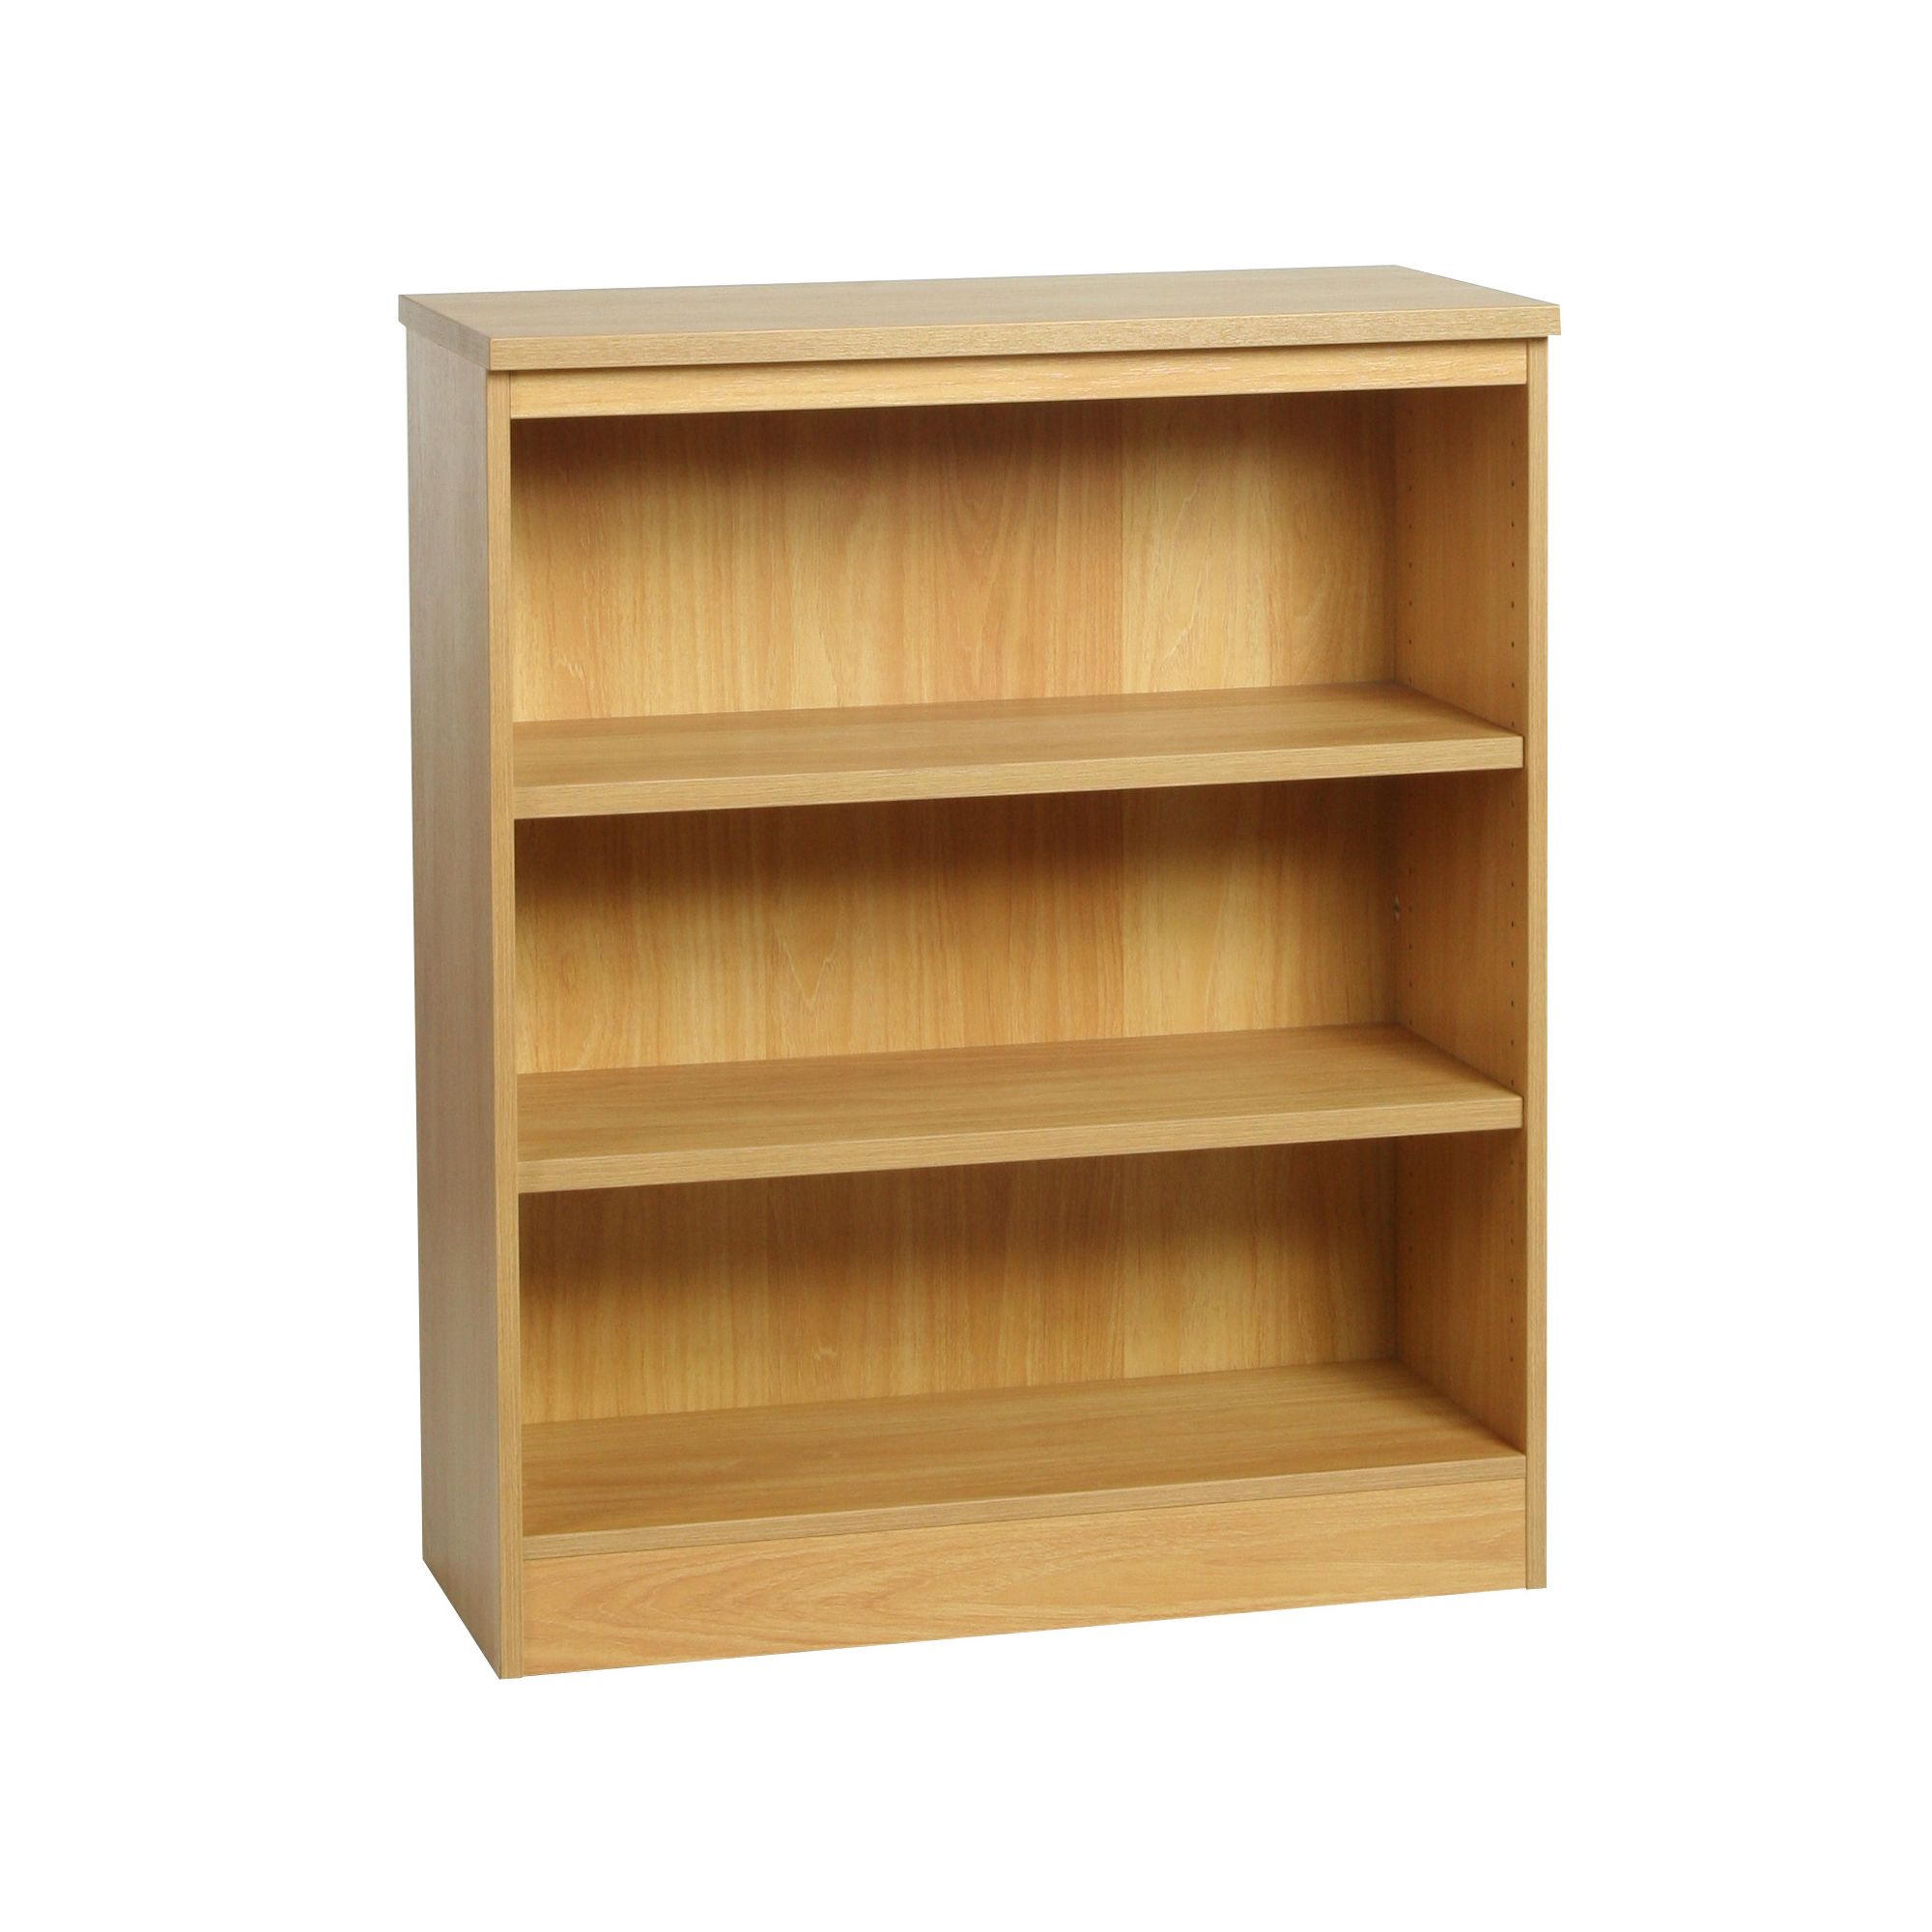 Enduro Three Shelf Wide Bookcase - Walnut at Tesco Direct